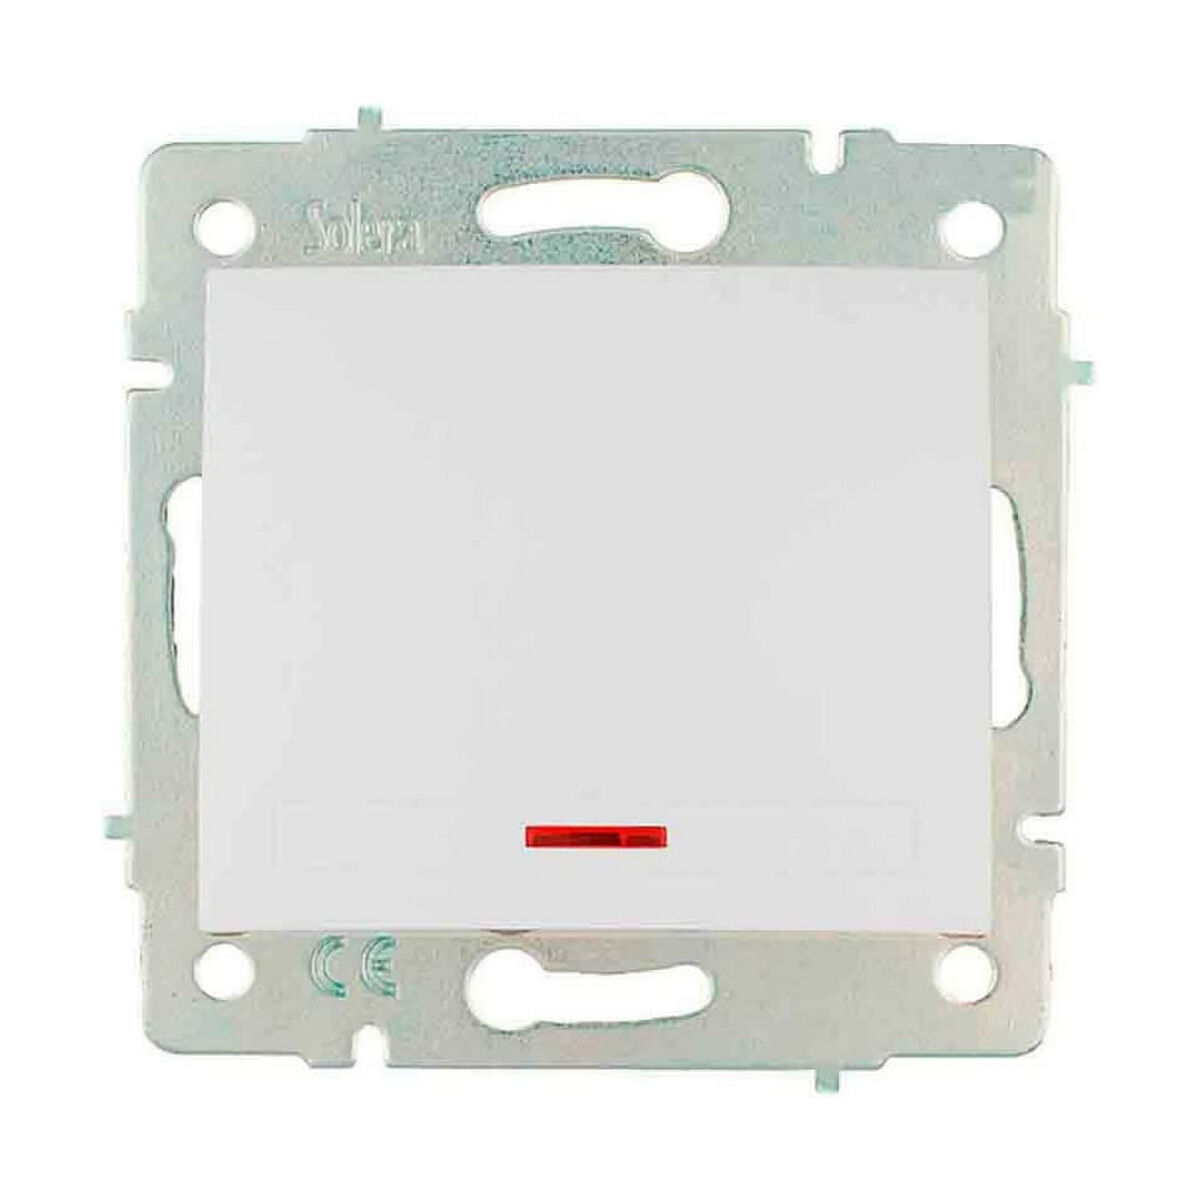 Interrupteur Solera erp02ilqc 8,3 x 8,1 cm